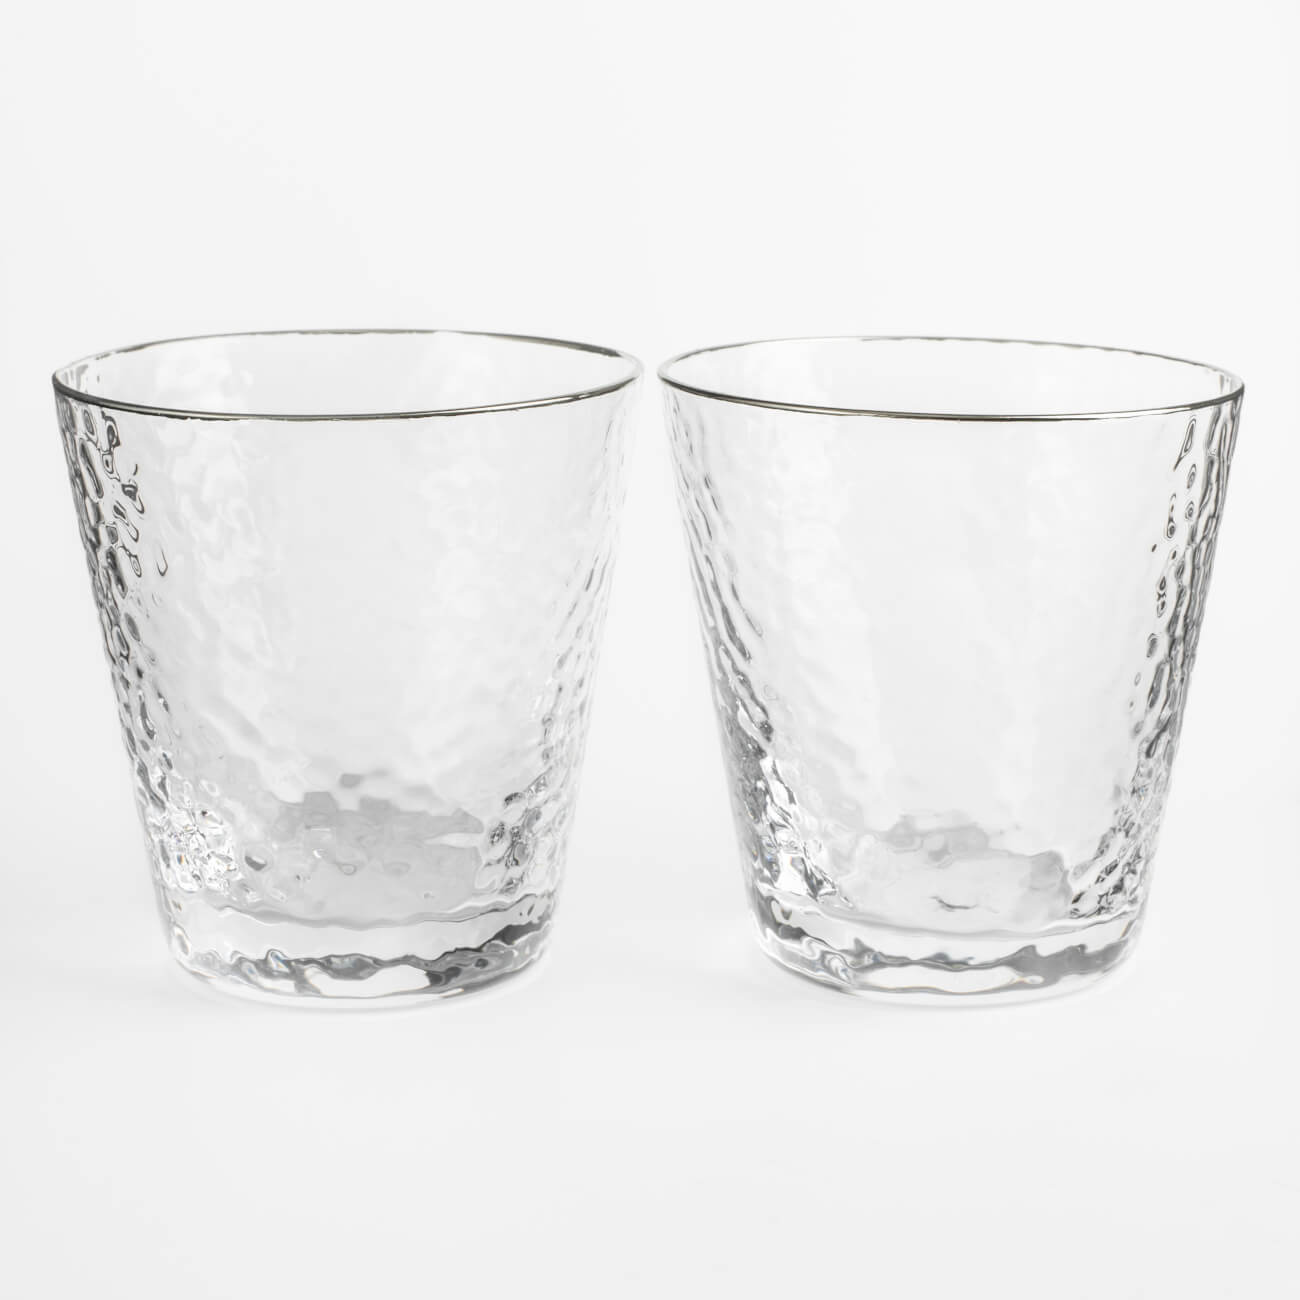 стакан для виски 270 мл 2 шт стекло ripply Стакан для виски, 270 мл, 2 шт, стекло, с серебристым кантом, Ripply silver